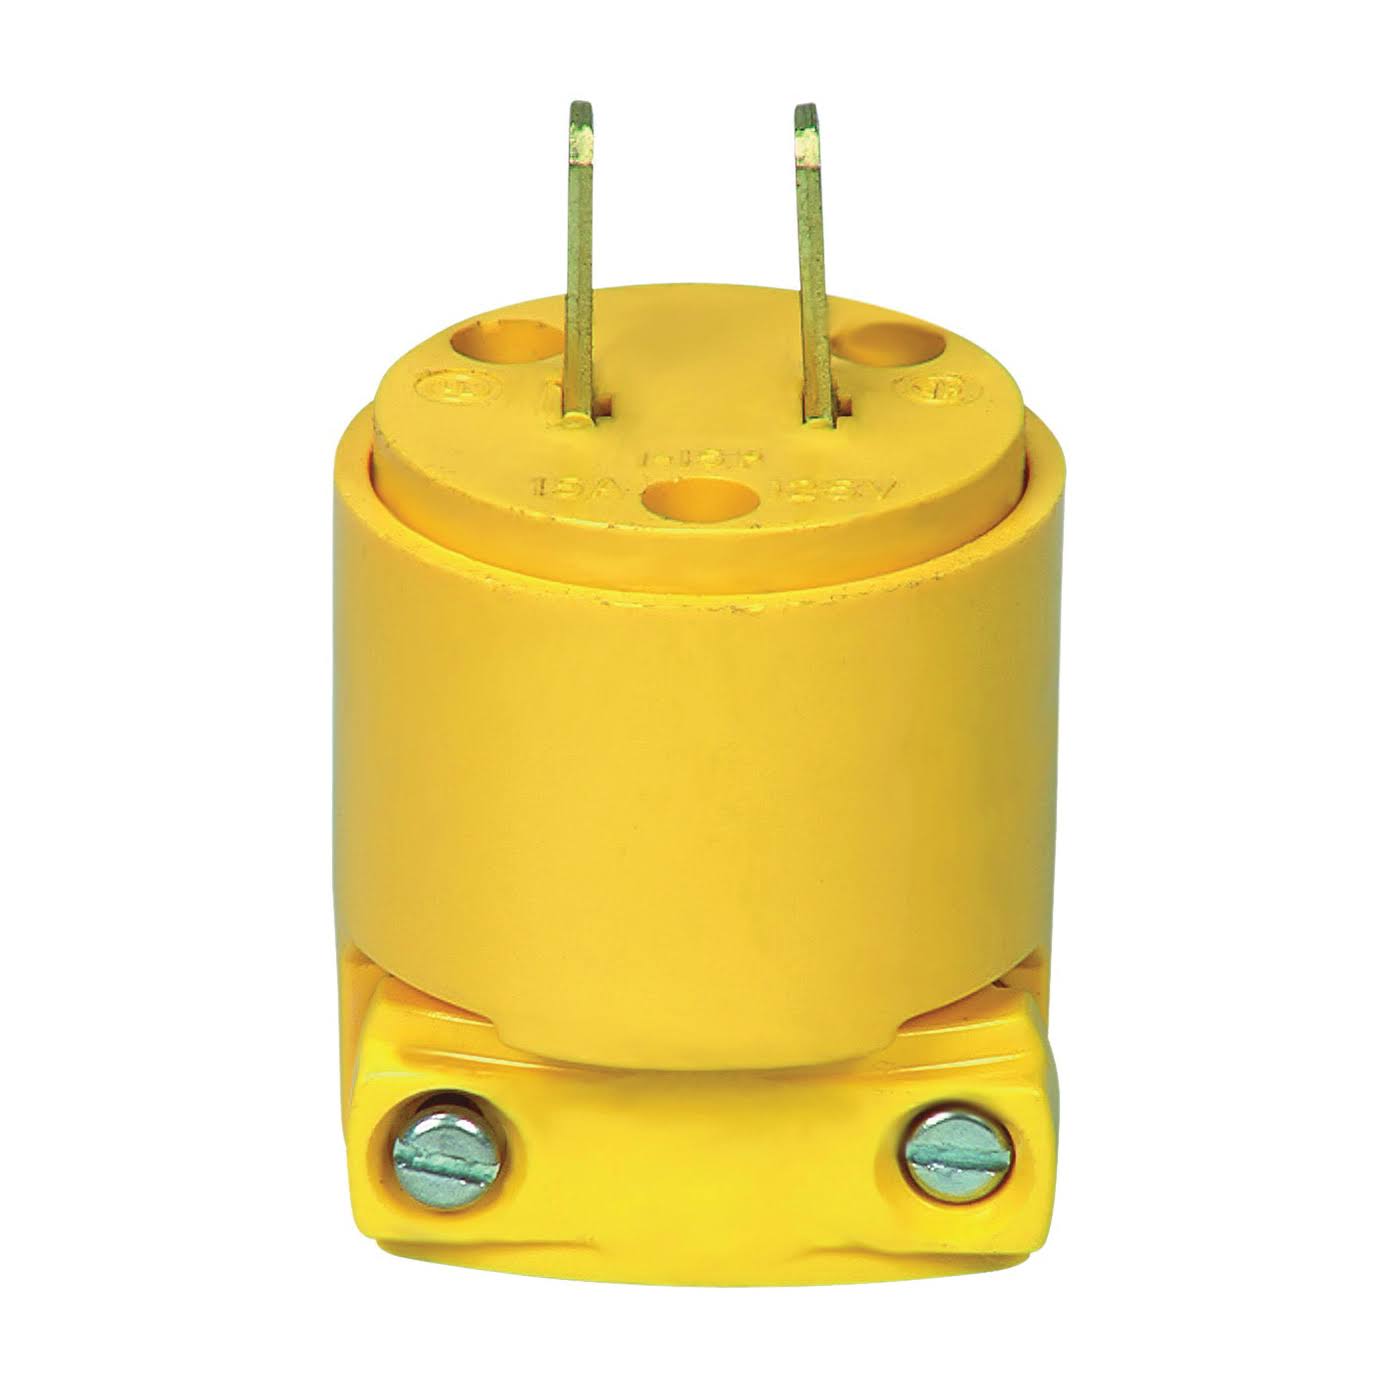 Cooper Wiring Devices Vinyl Plug - 15 Amp, 125V, Yellow